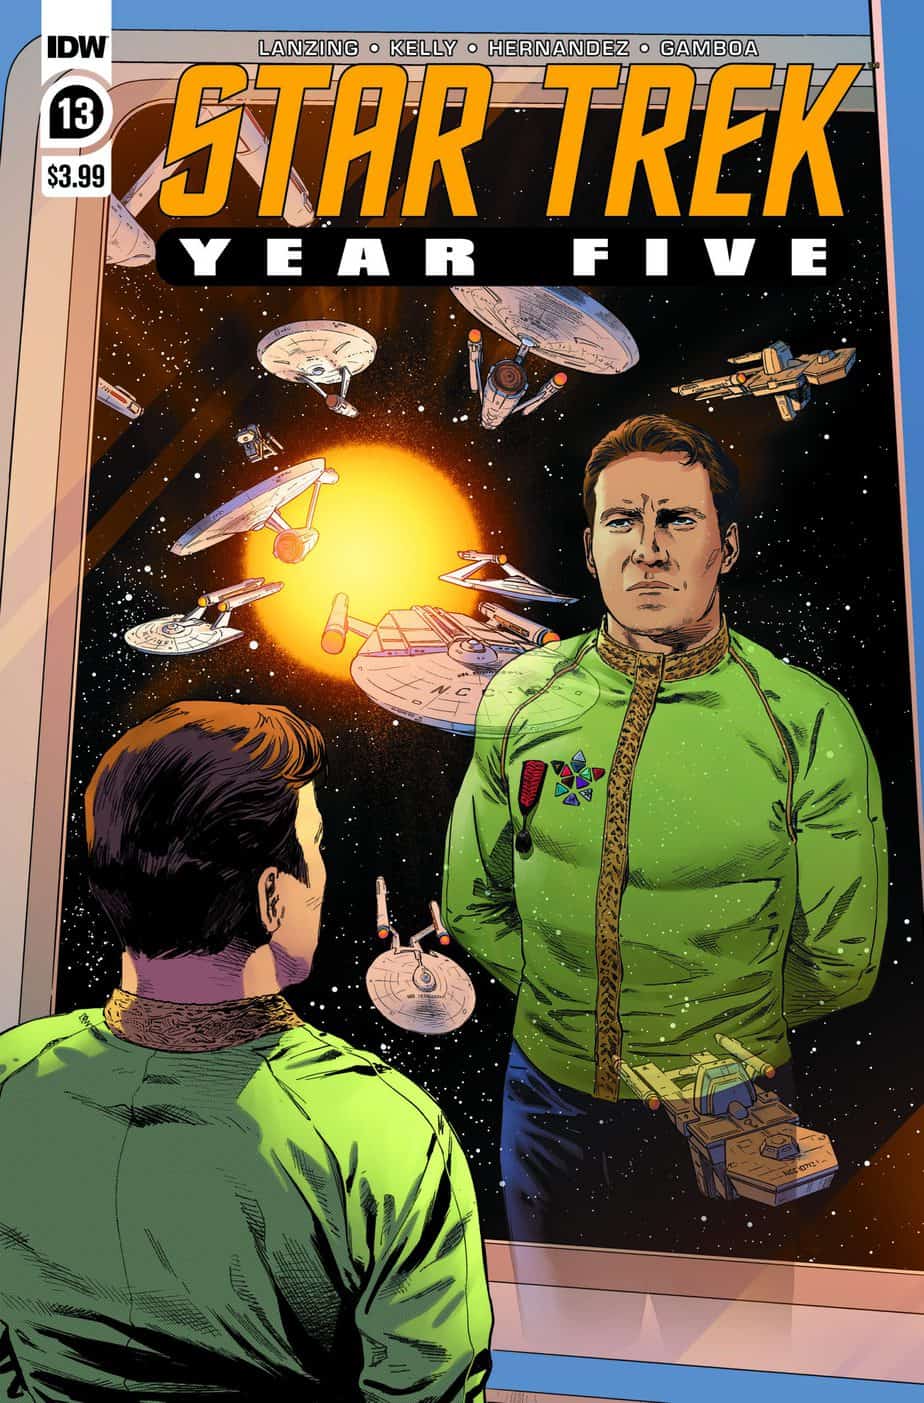 Star Trek: Year Five #13 - Cover A